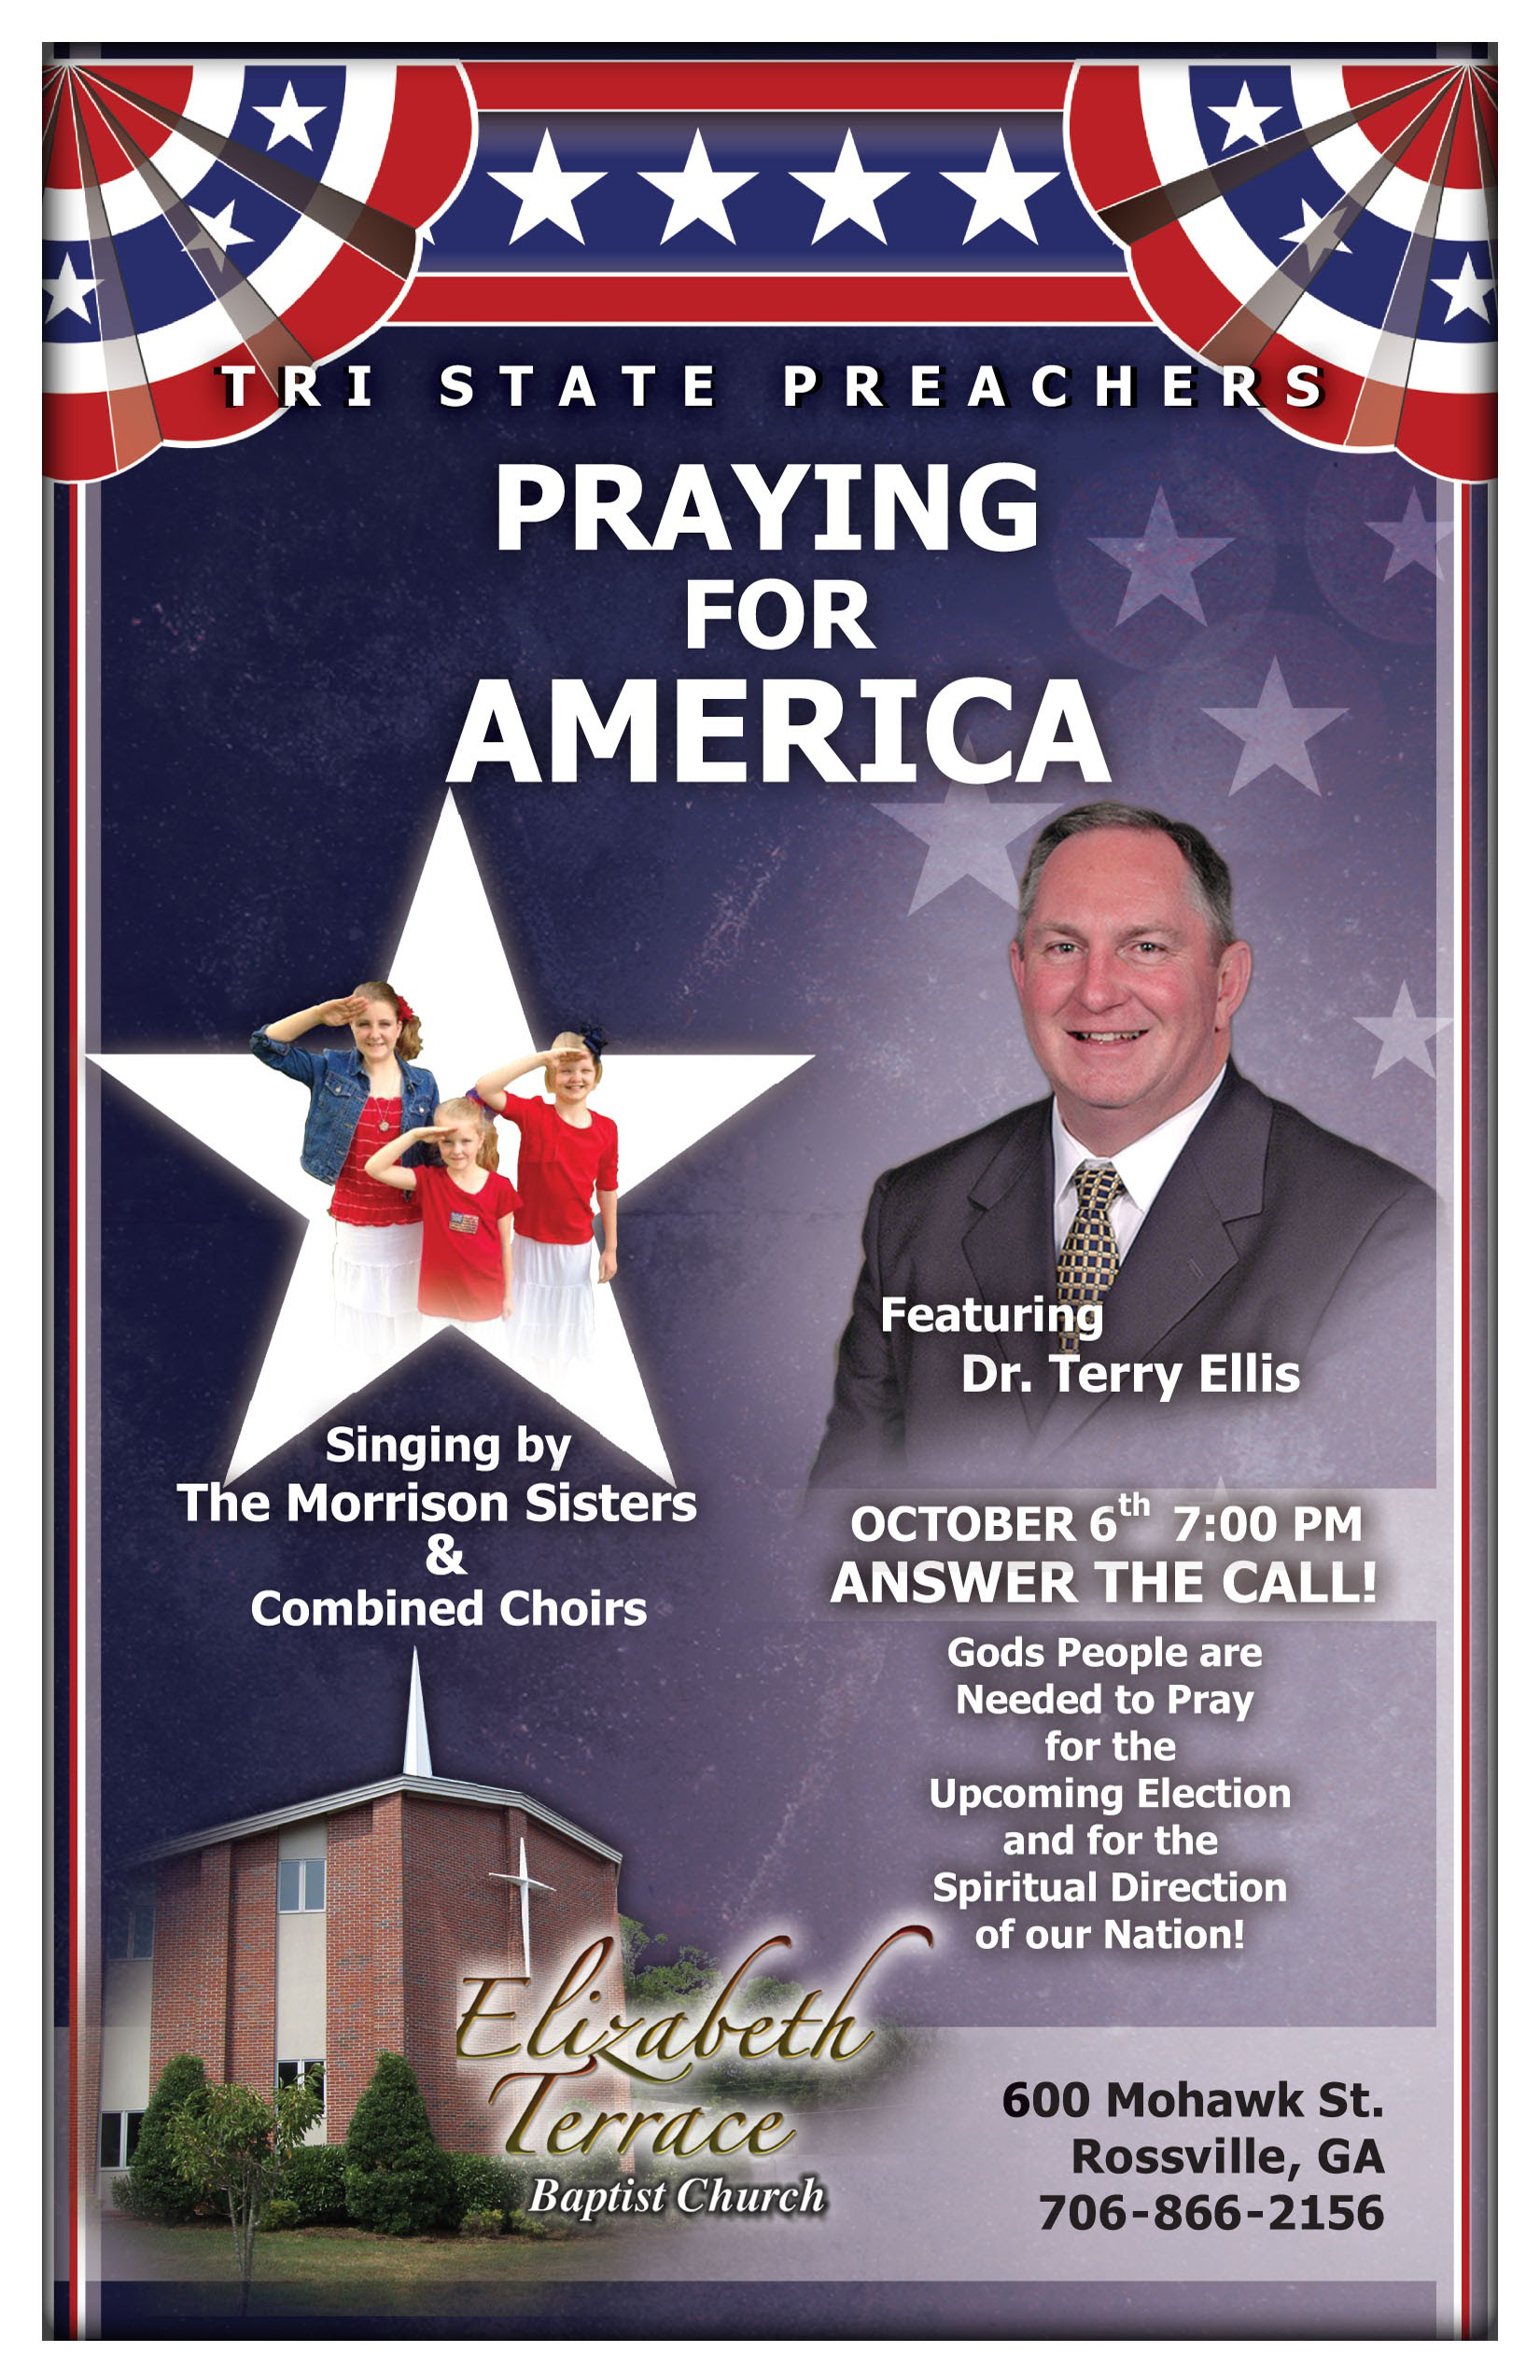 Praying_For_America_Rally_Image.png